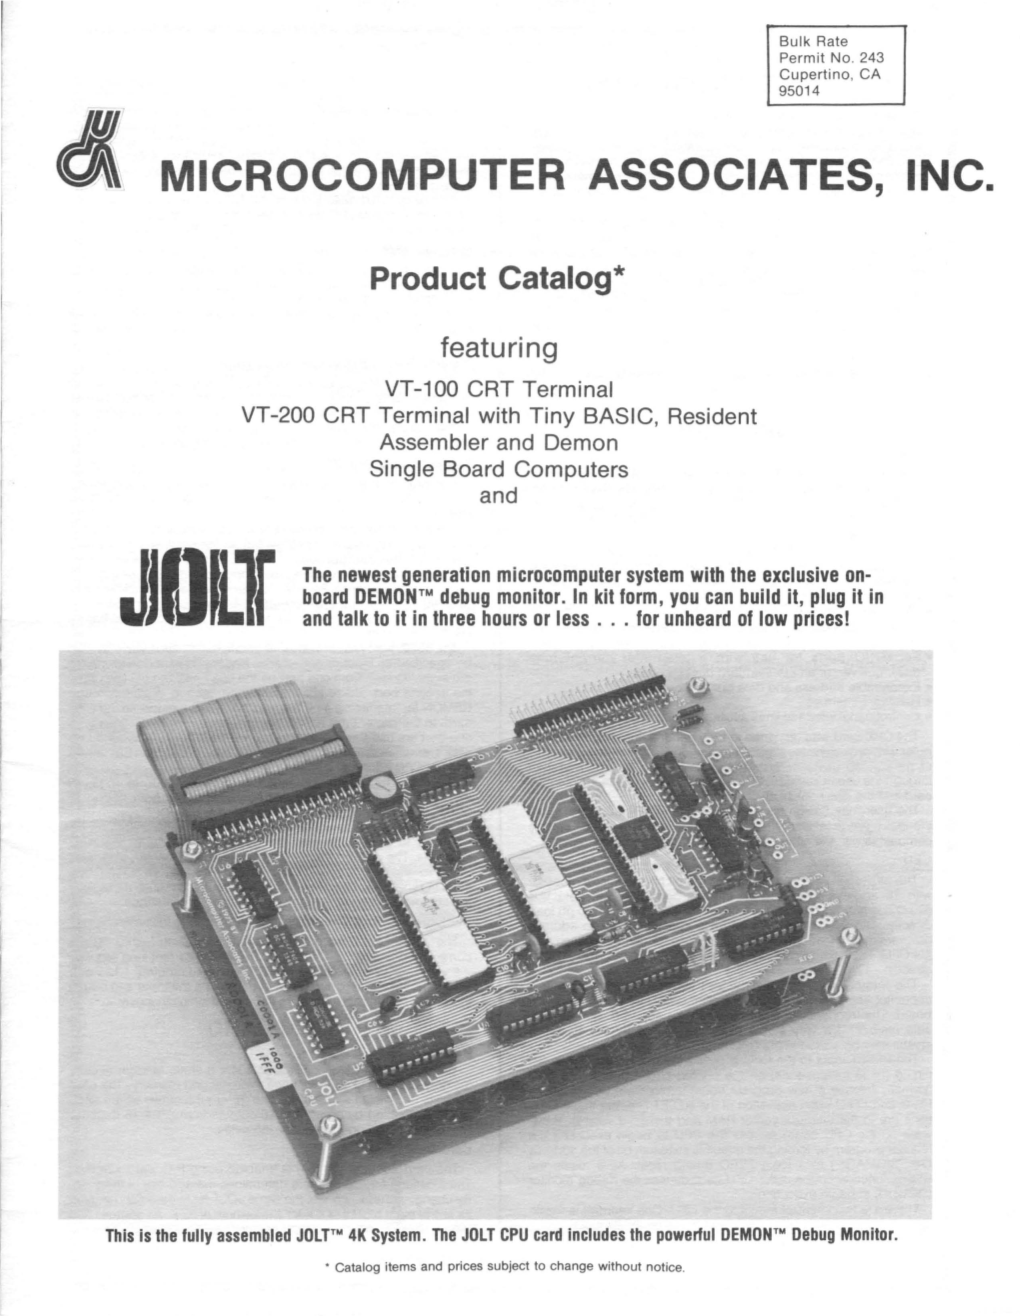 Microcomputer Associates, Inc